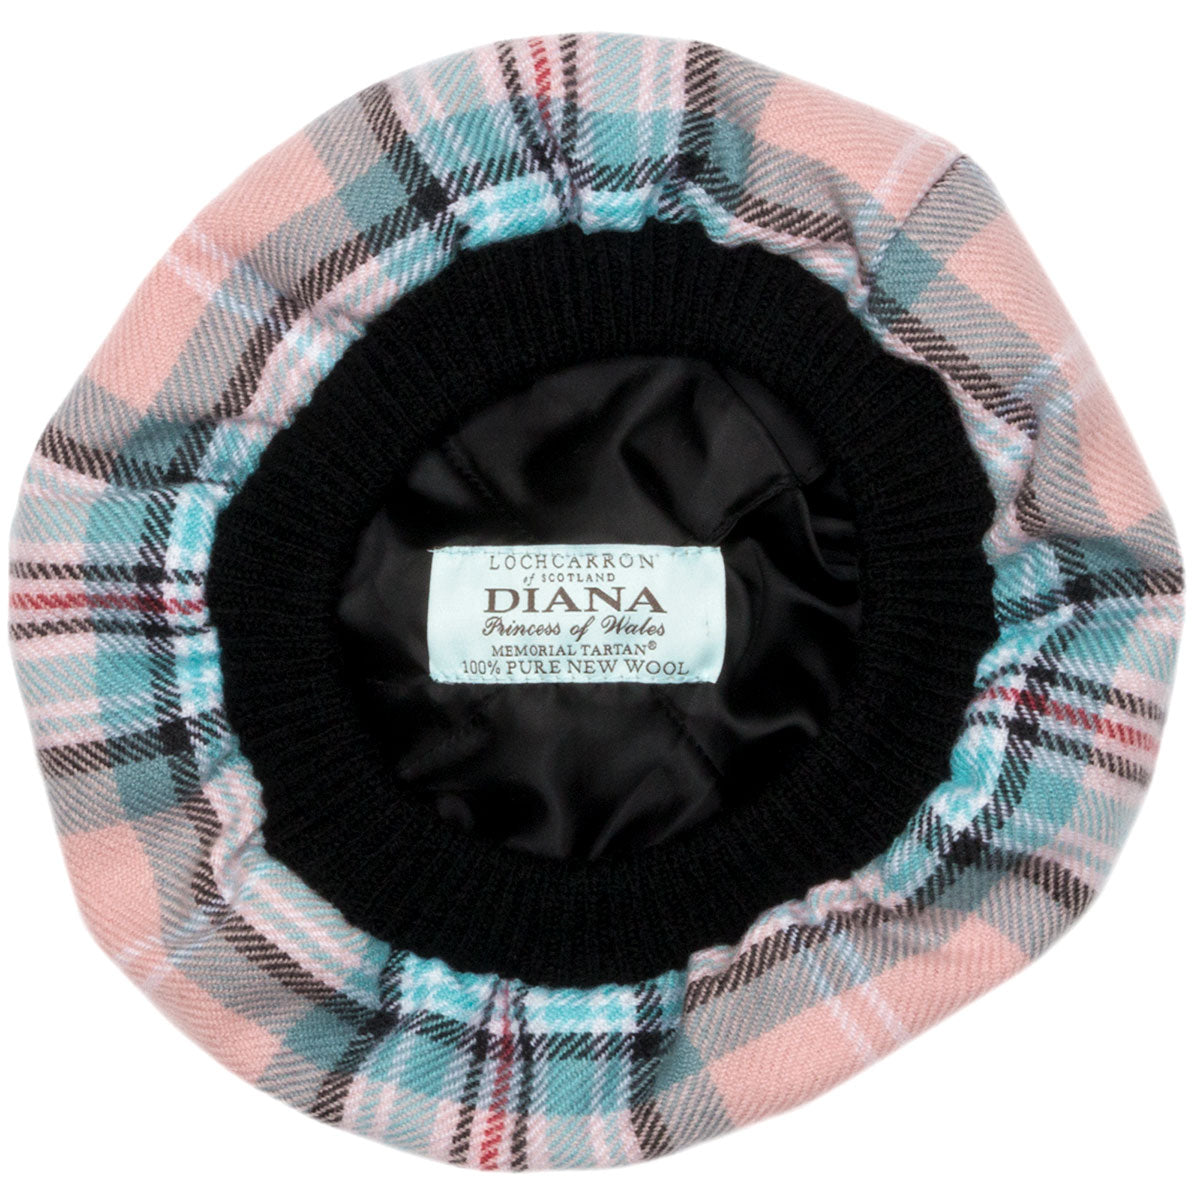 Princess Diana Memorial Tartan Brushed Wool Tam